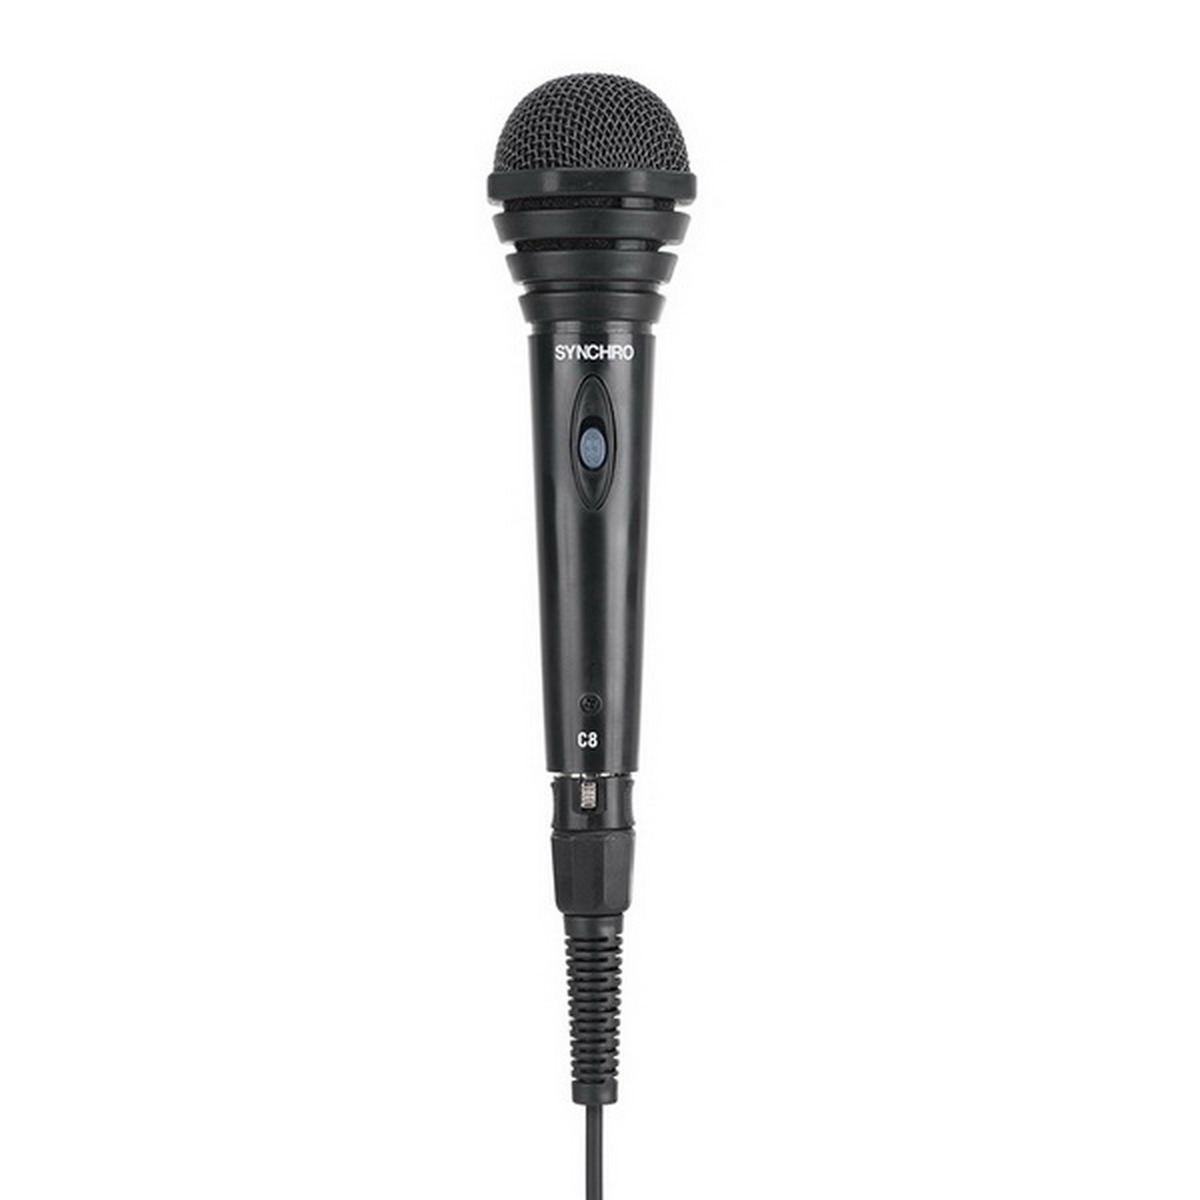 Synchro Microphone C10